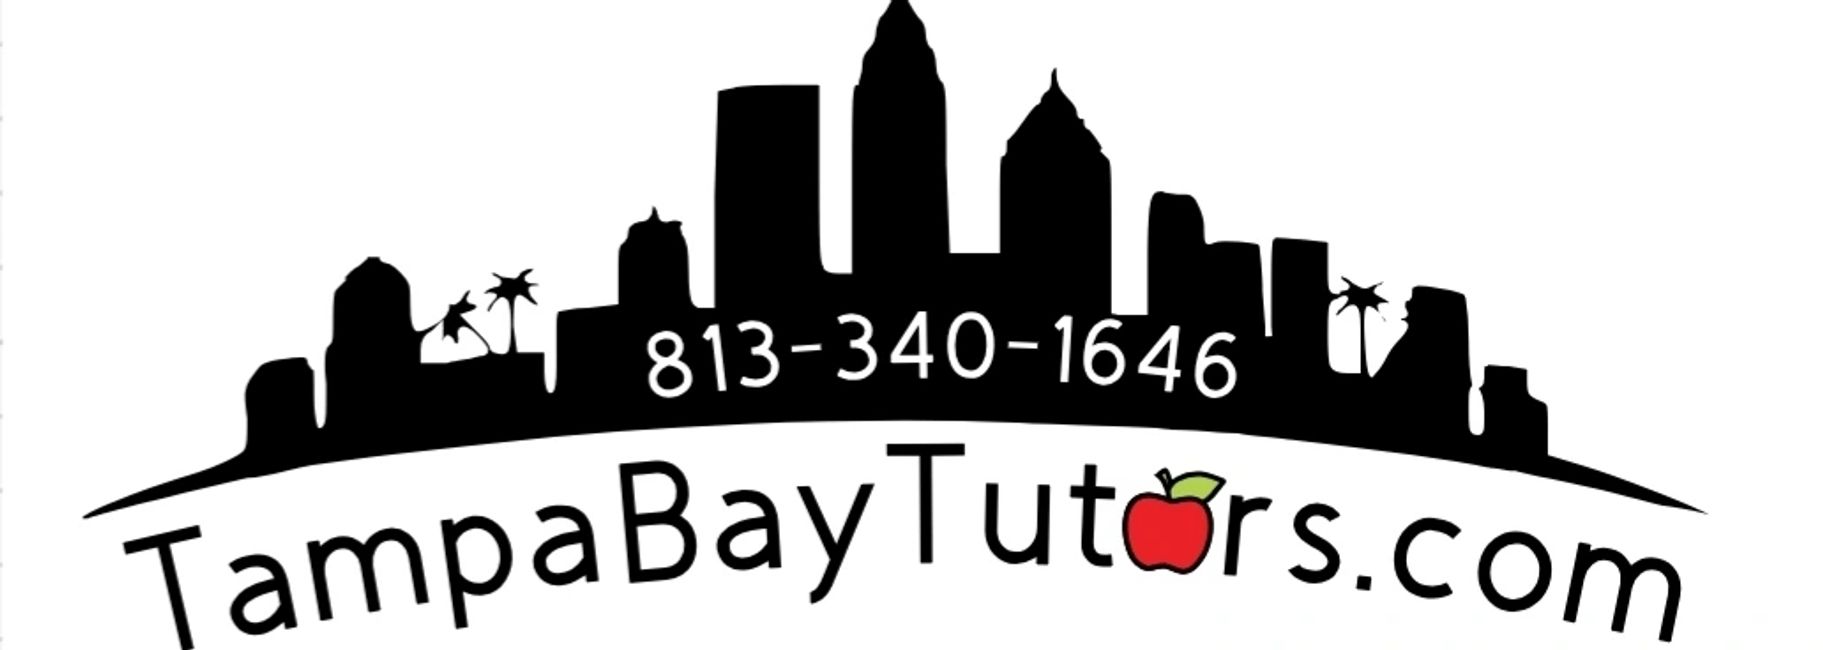 TampaBayTutors.com, online tutoring, in-home tutoring, private tutoring, one-on-one tutoring